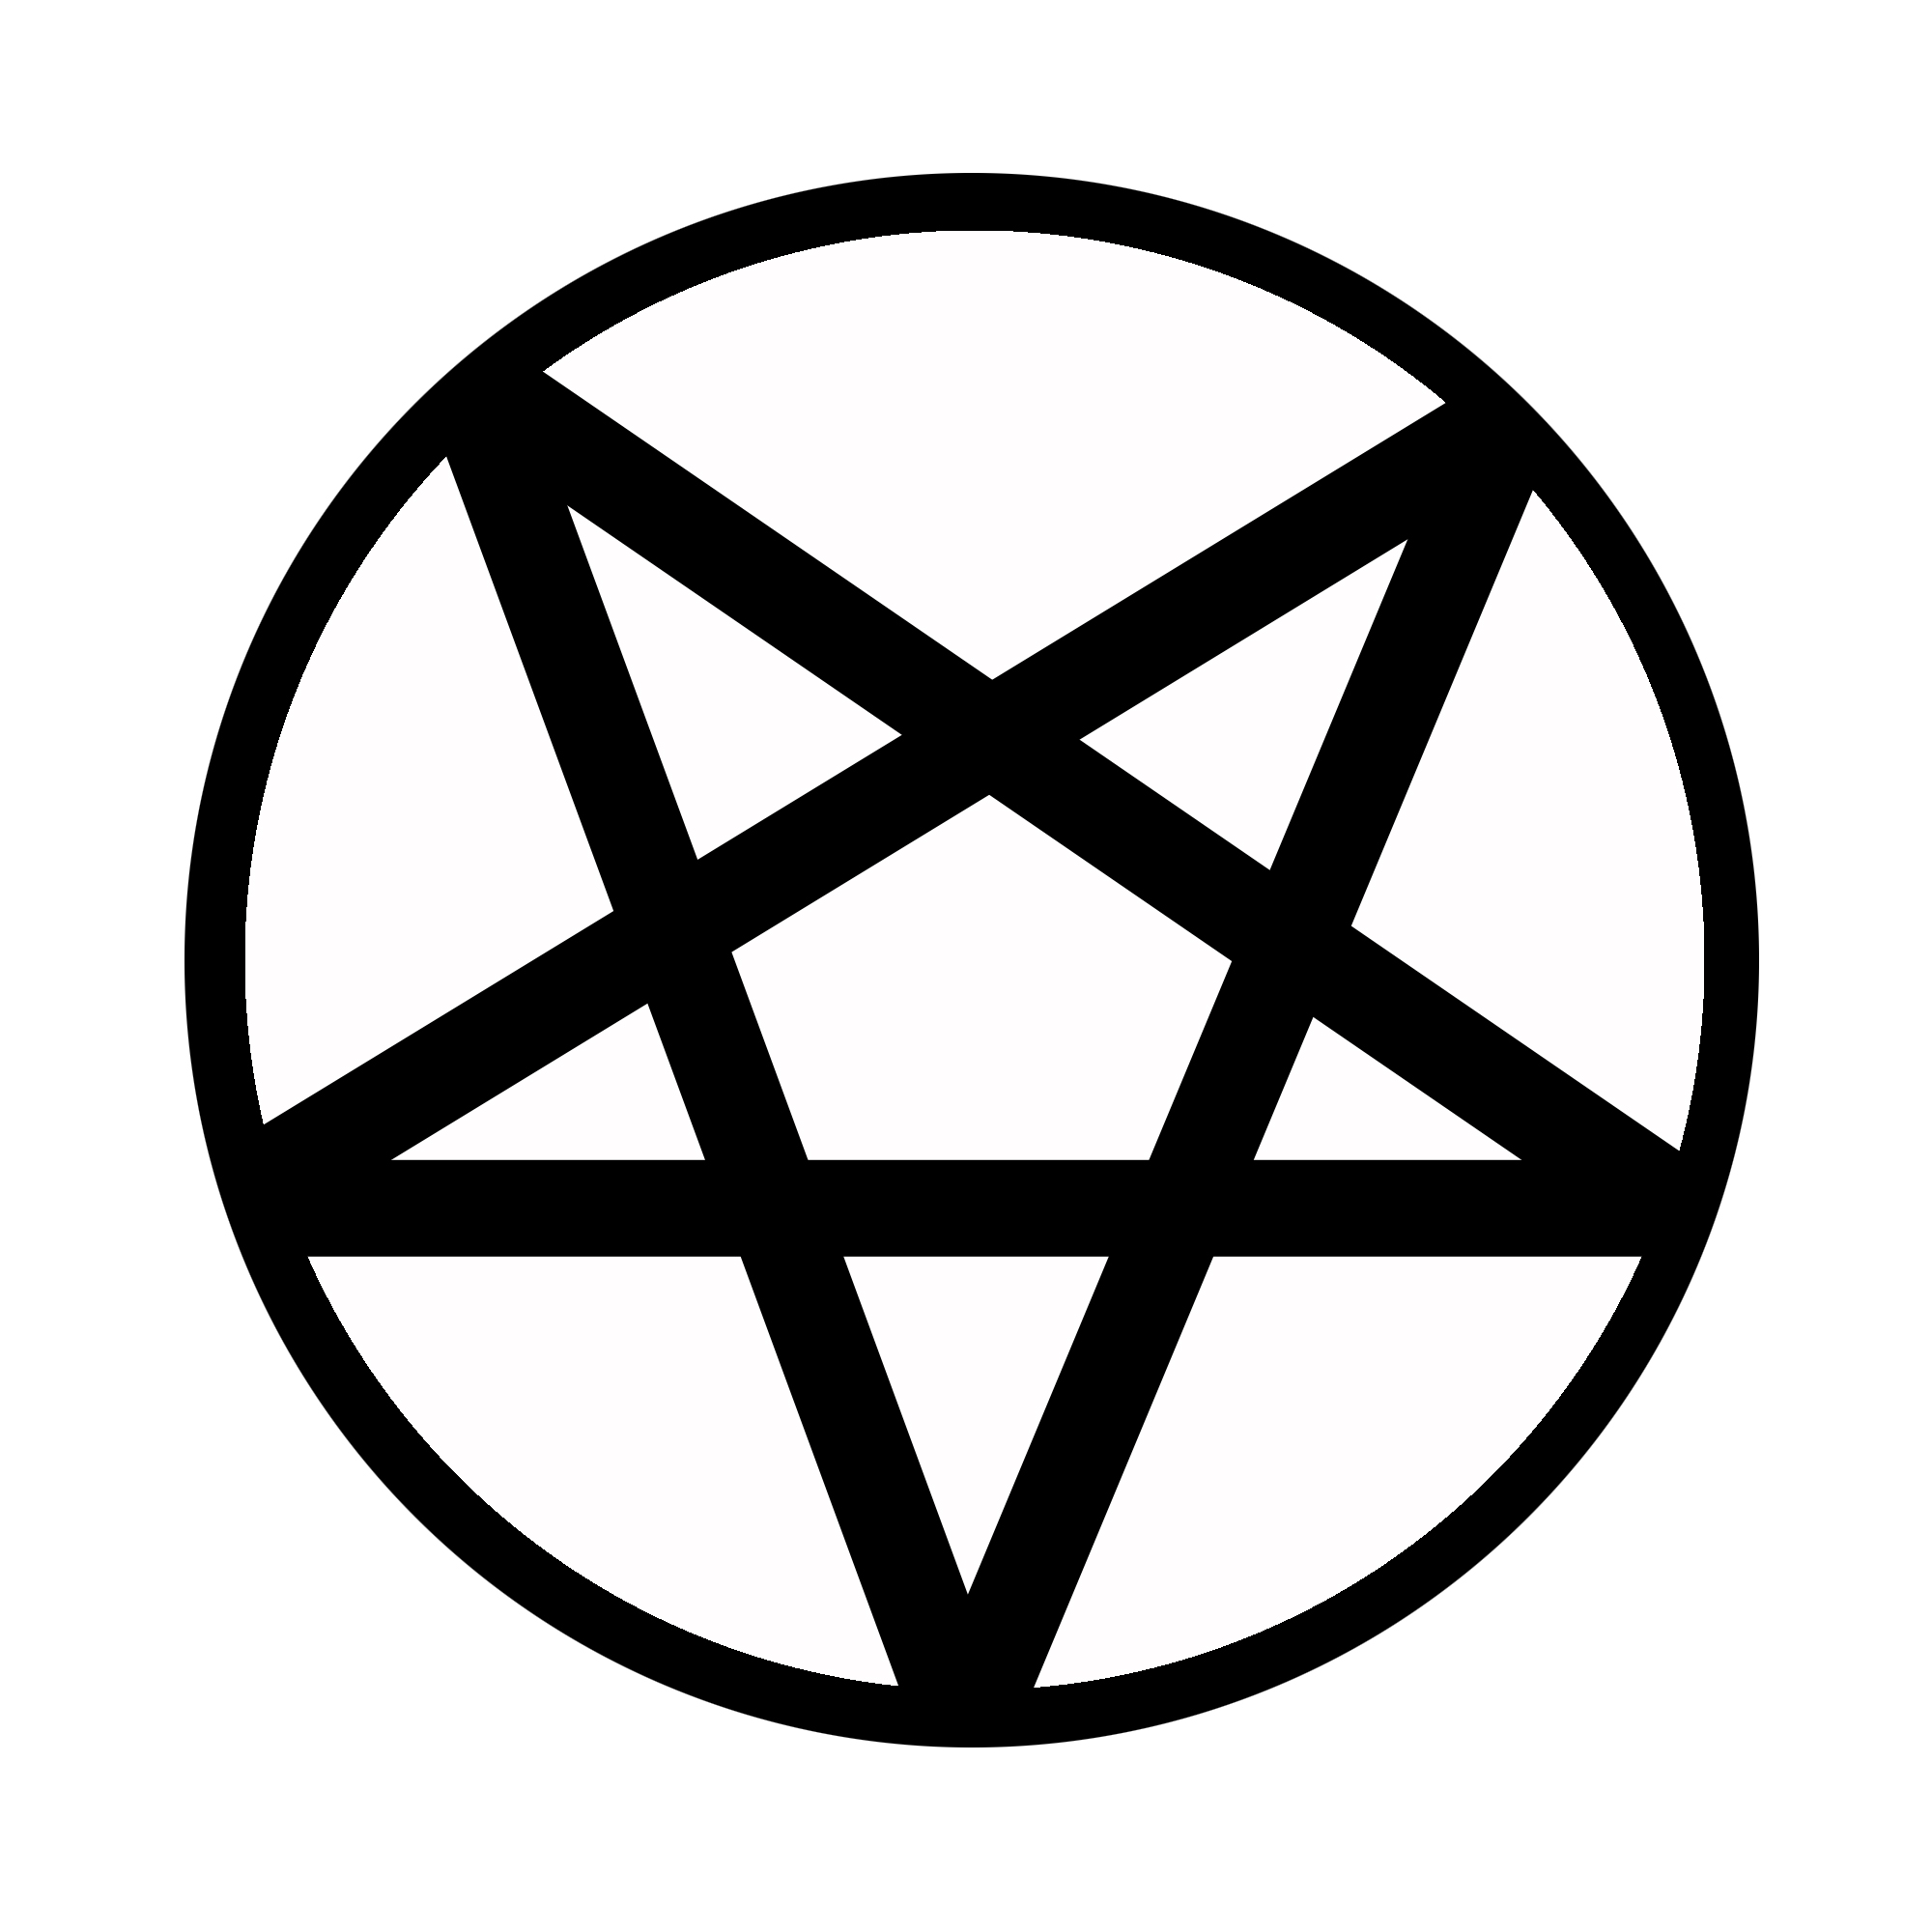 Pentagram 